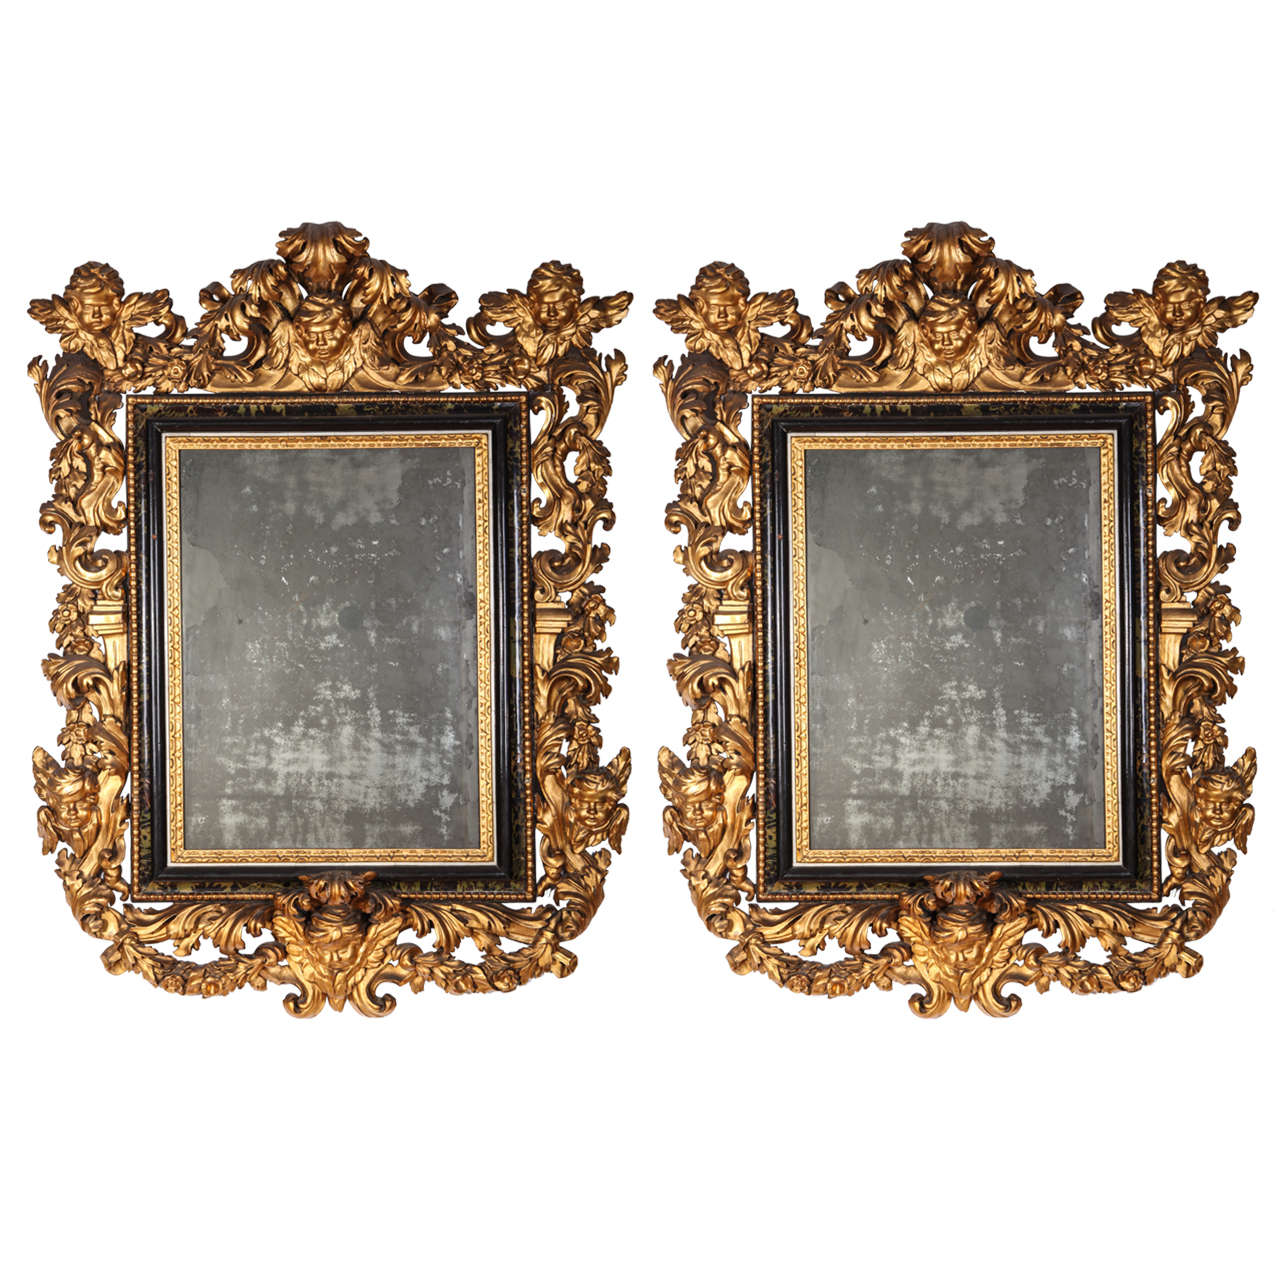 Stunning Pair of Carved Italian Giltwood Mirrors 17' century